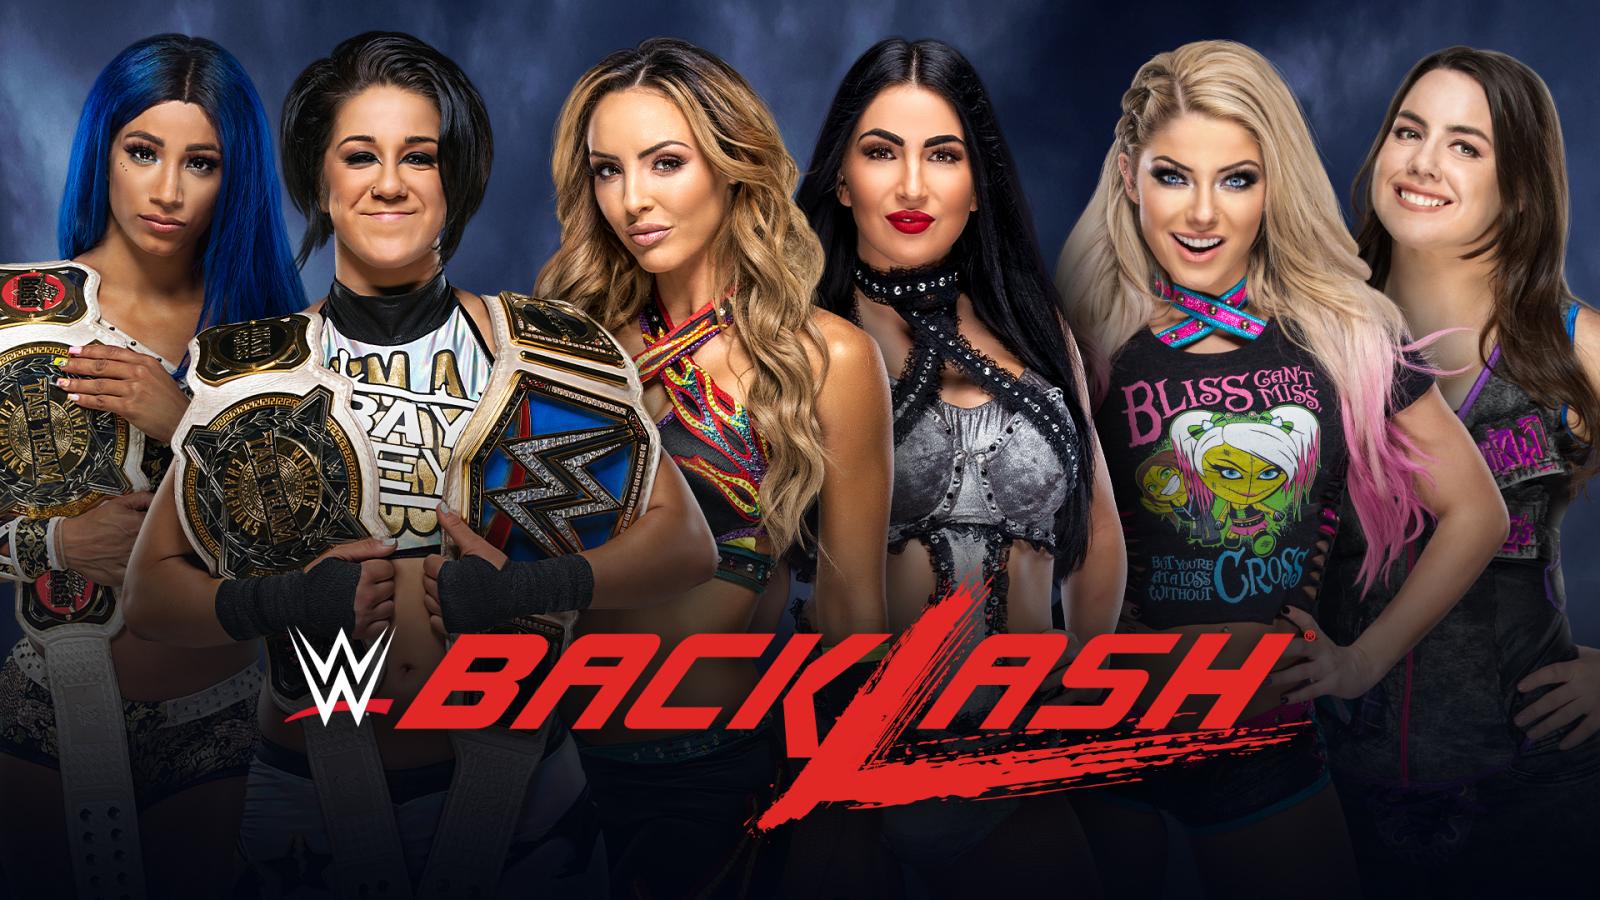 Sasha Banks Bayley vs The IIconics vs Alexa Bliss NIkki Cross - WWE Backlash 2020 (Women's Tag Team Championship Match)